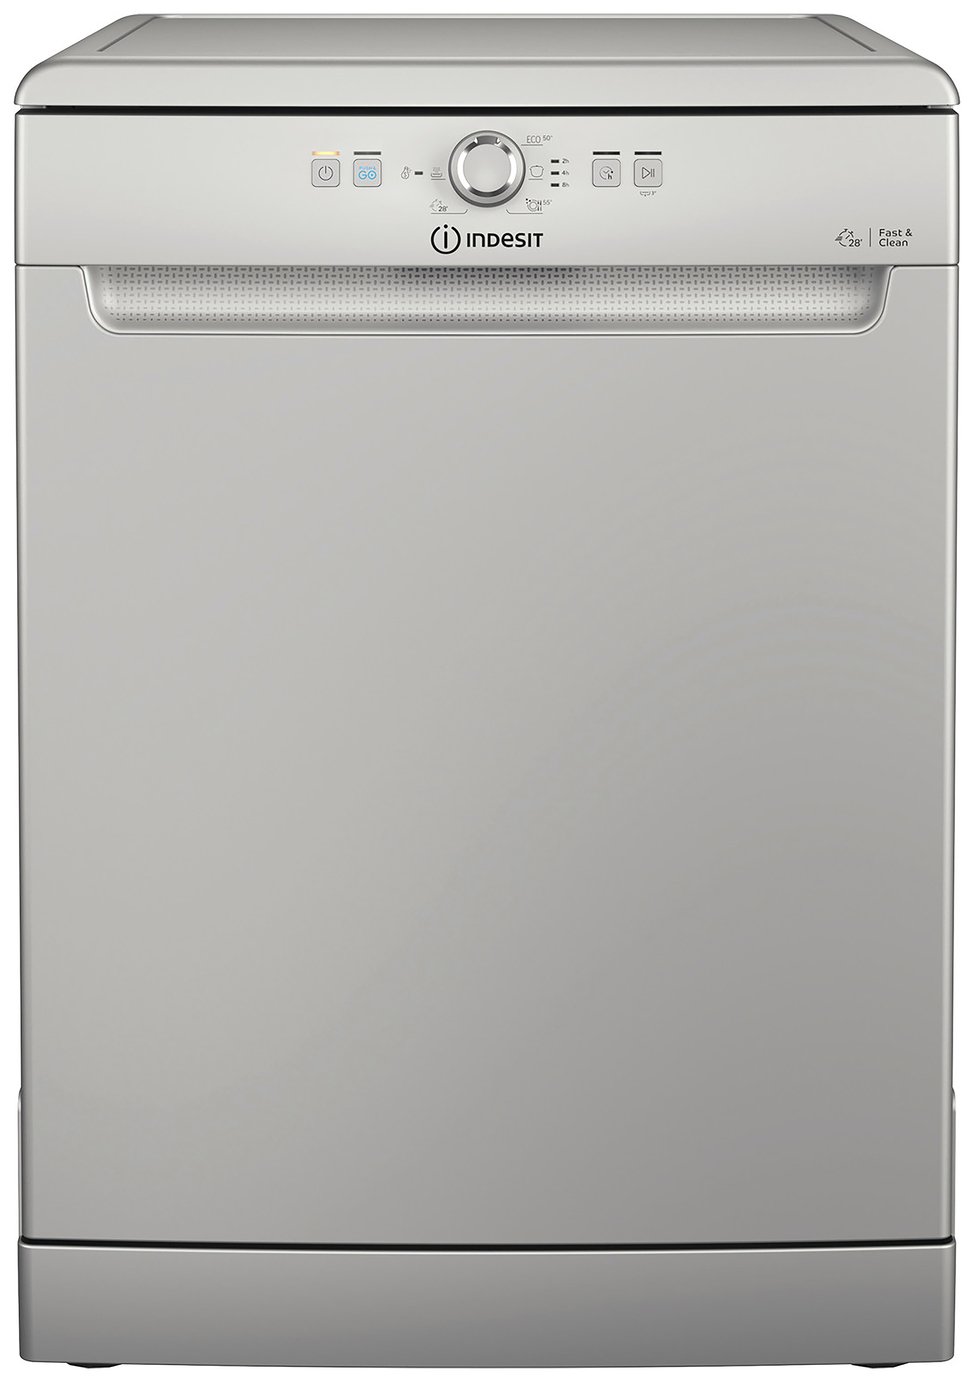 Indesit D2F HK26 S UK Full Size Dishwasher - Silver